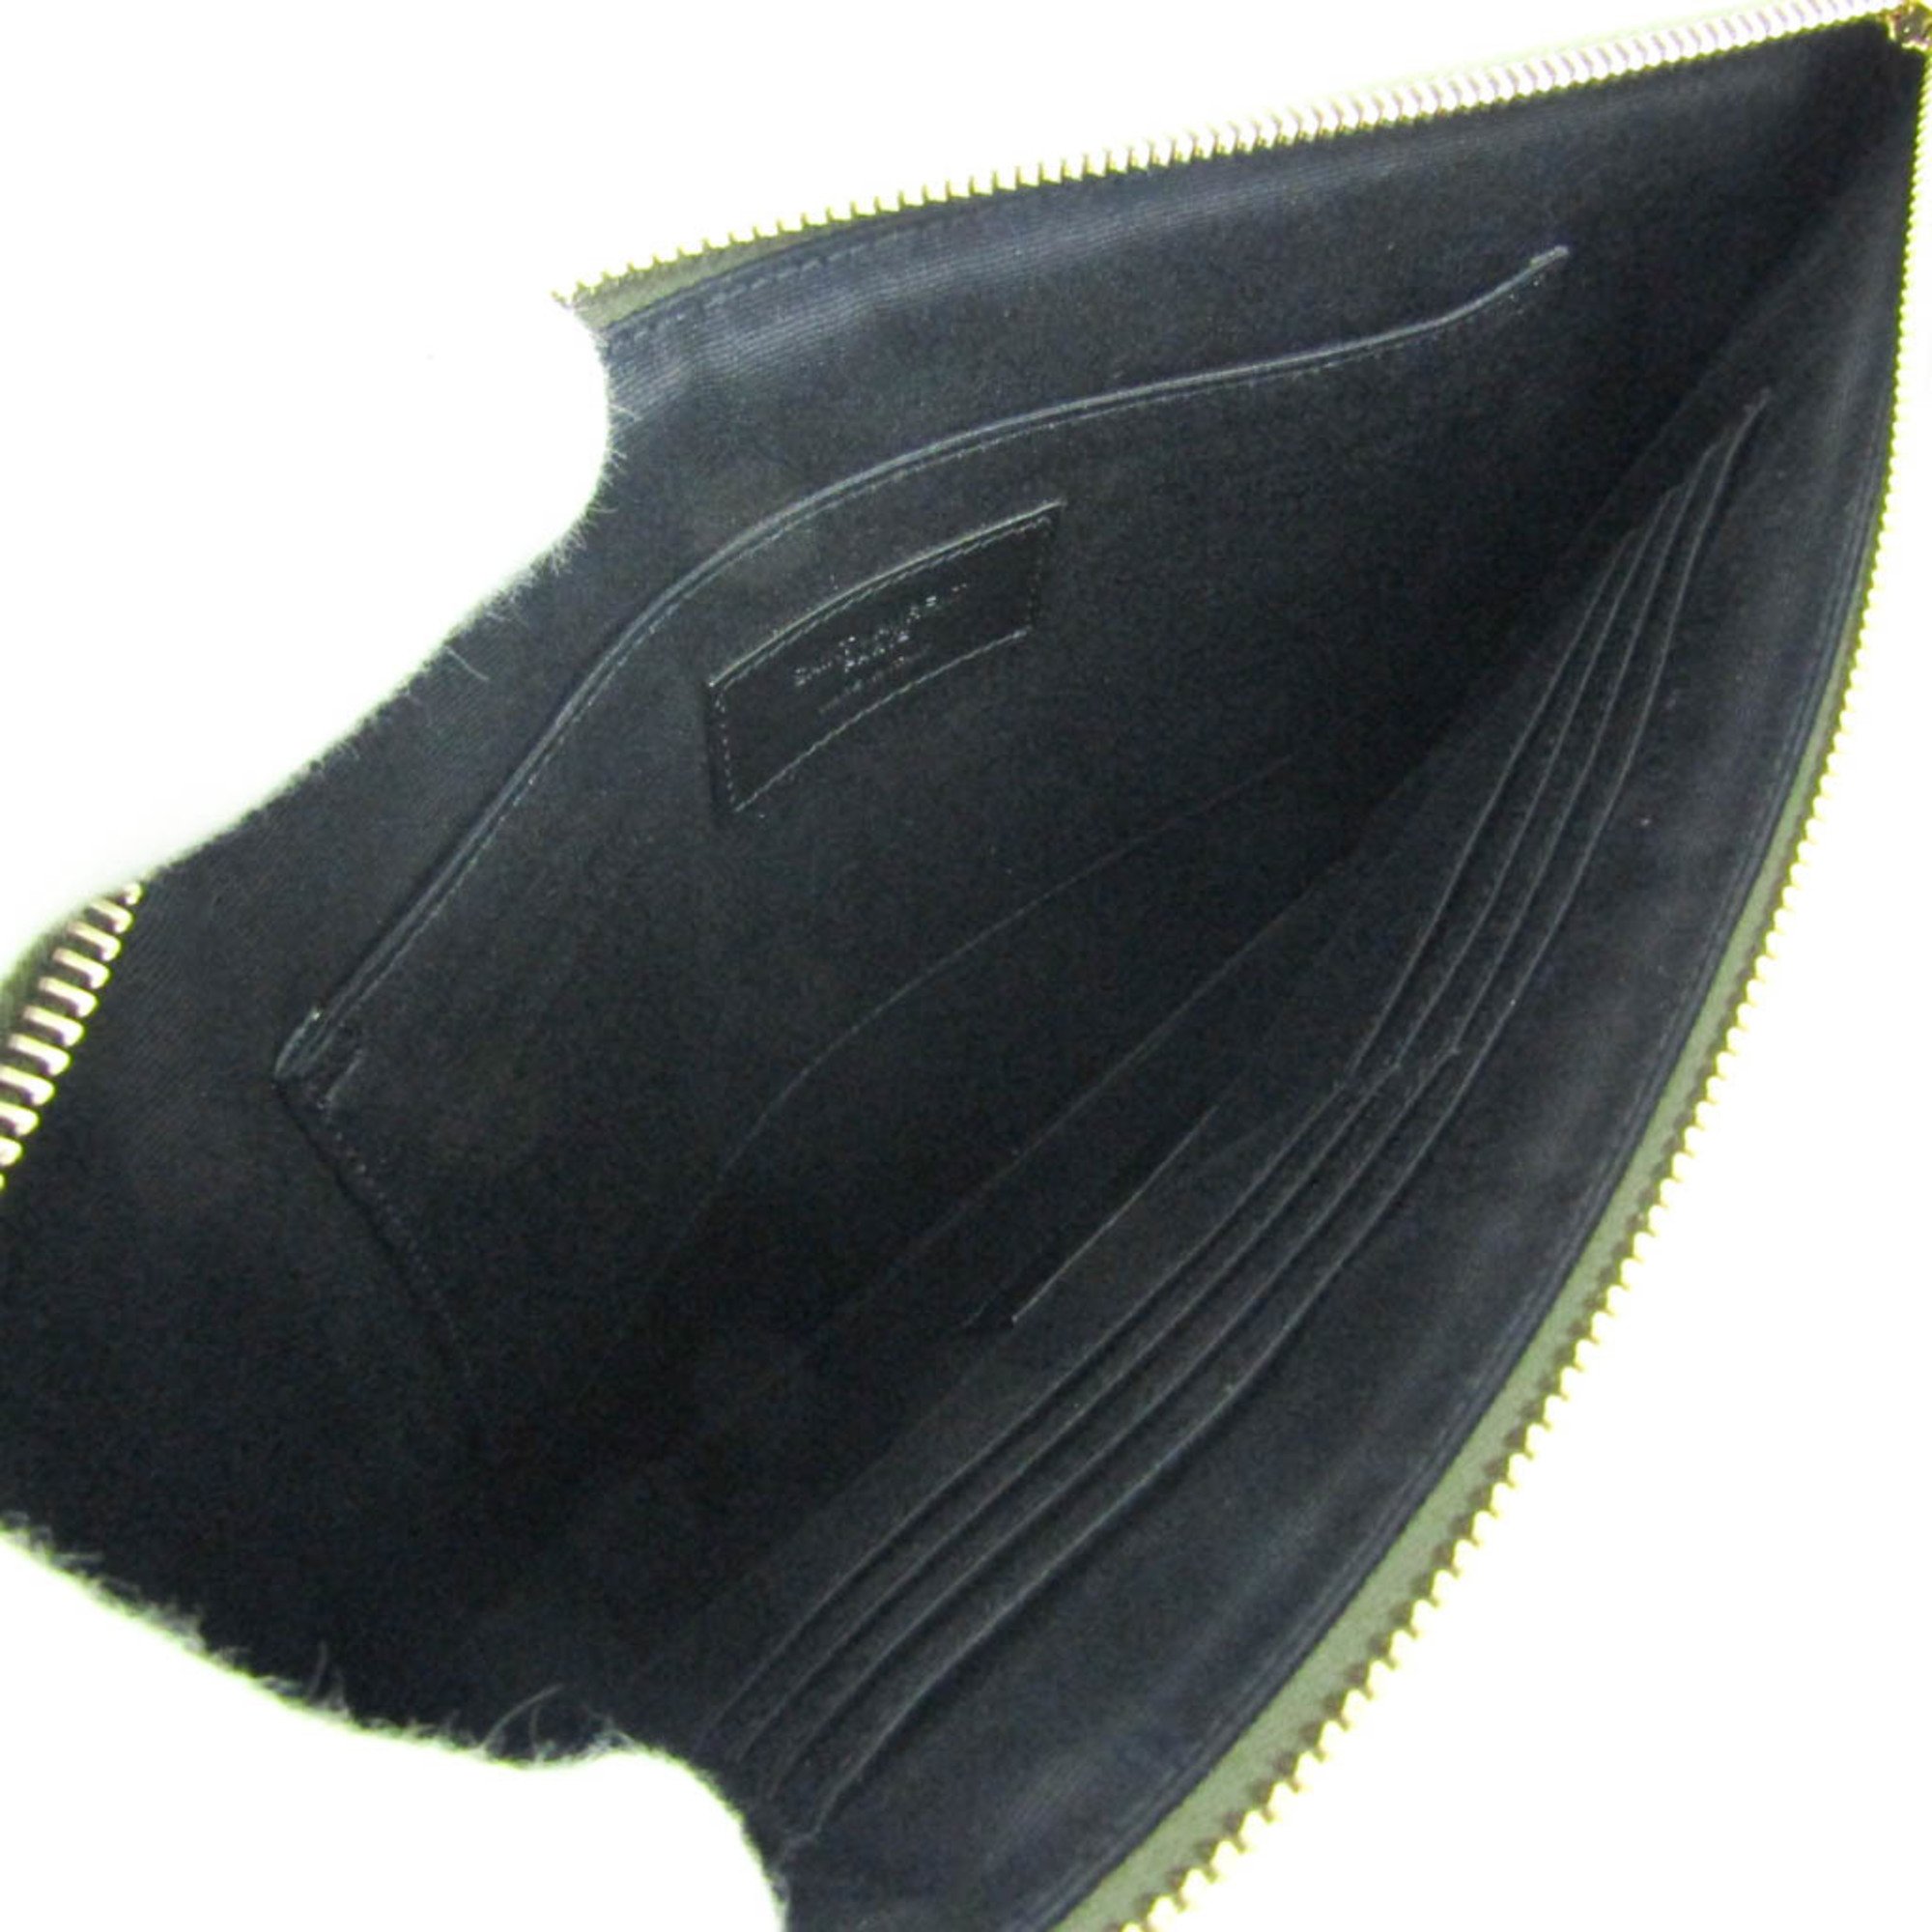 Saint Laurent Pineapple Pattern 397294 Women's Leather Clutch Bag Beige,Khaki